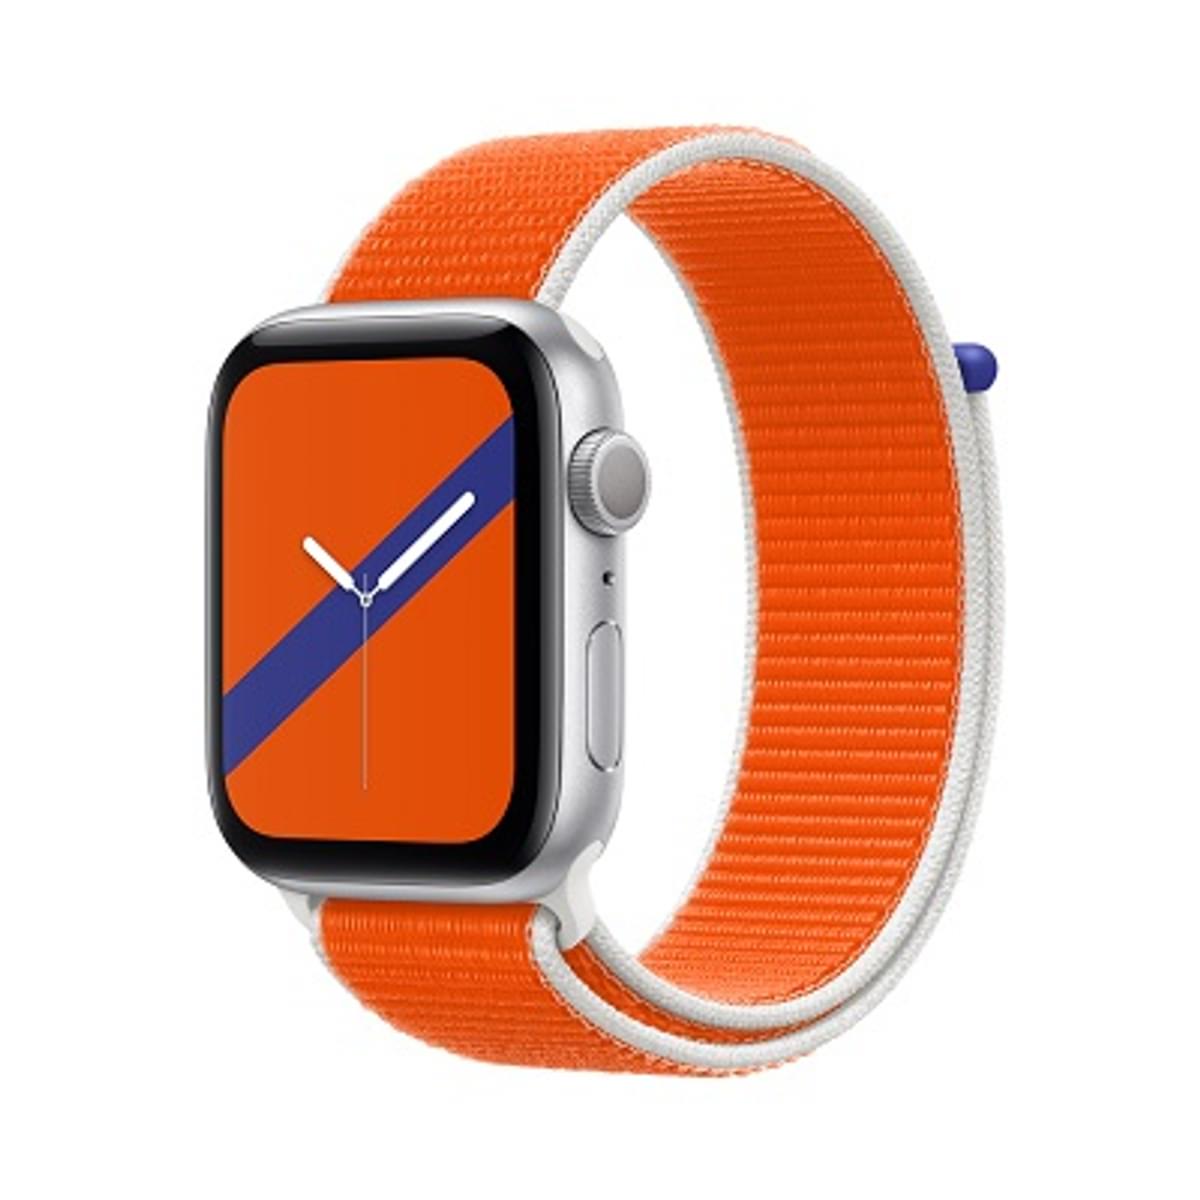 Apple lanceert de Apple Watch International Collection image